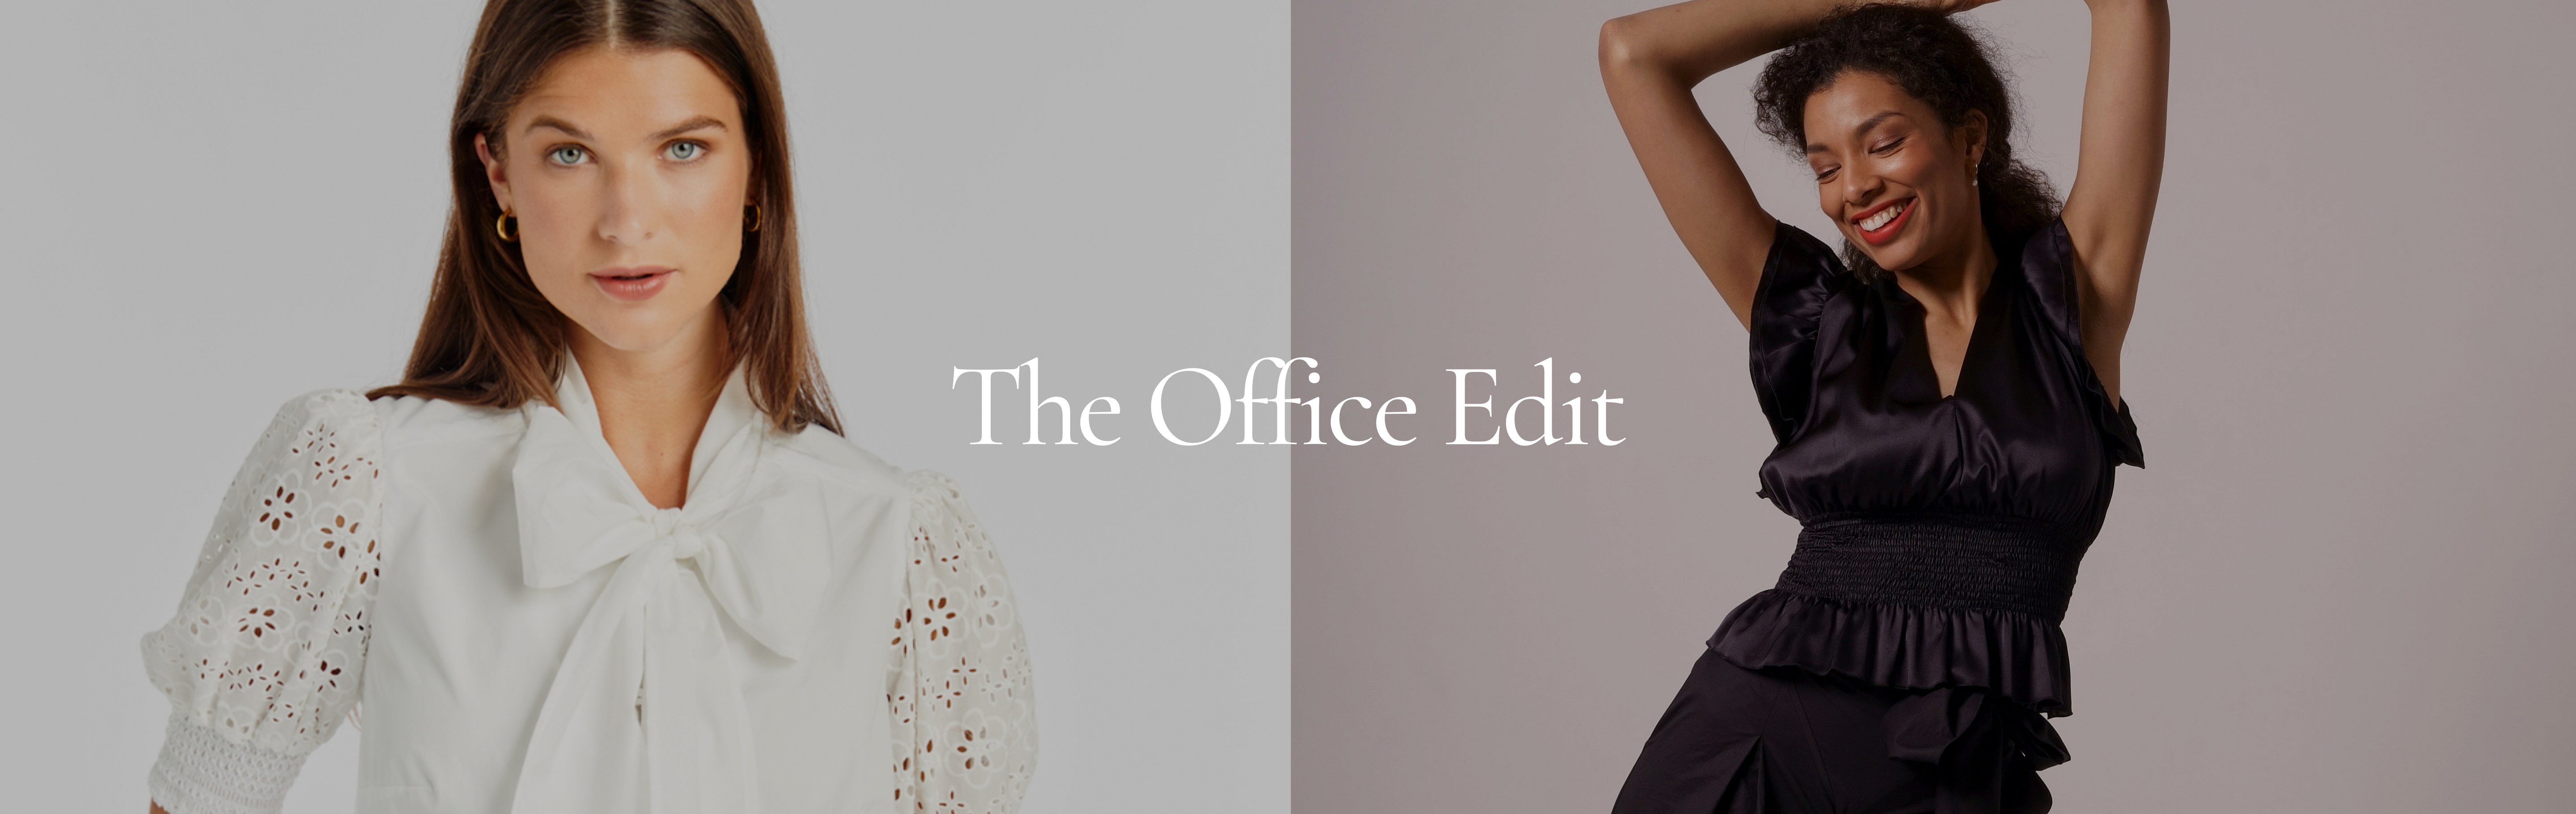 The Office Edit